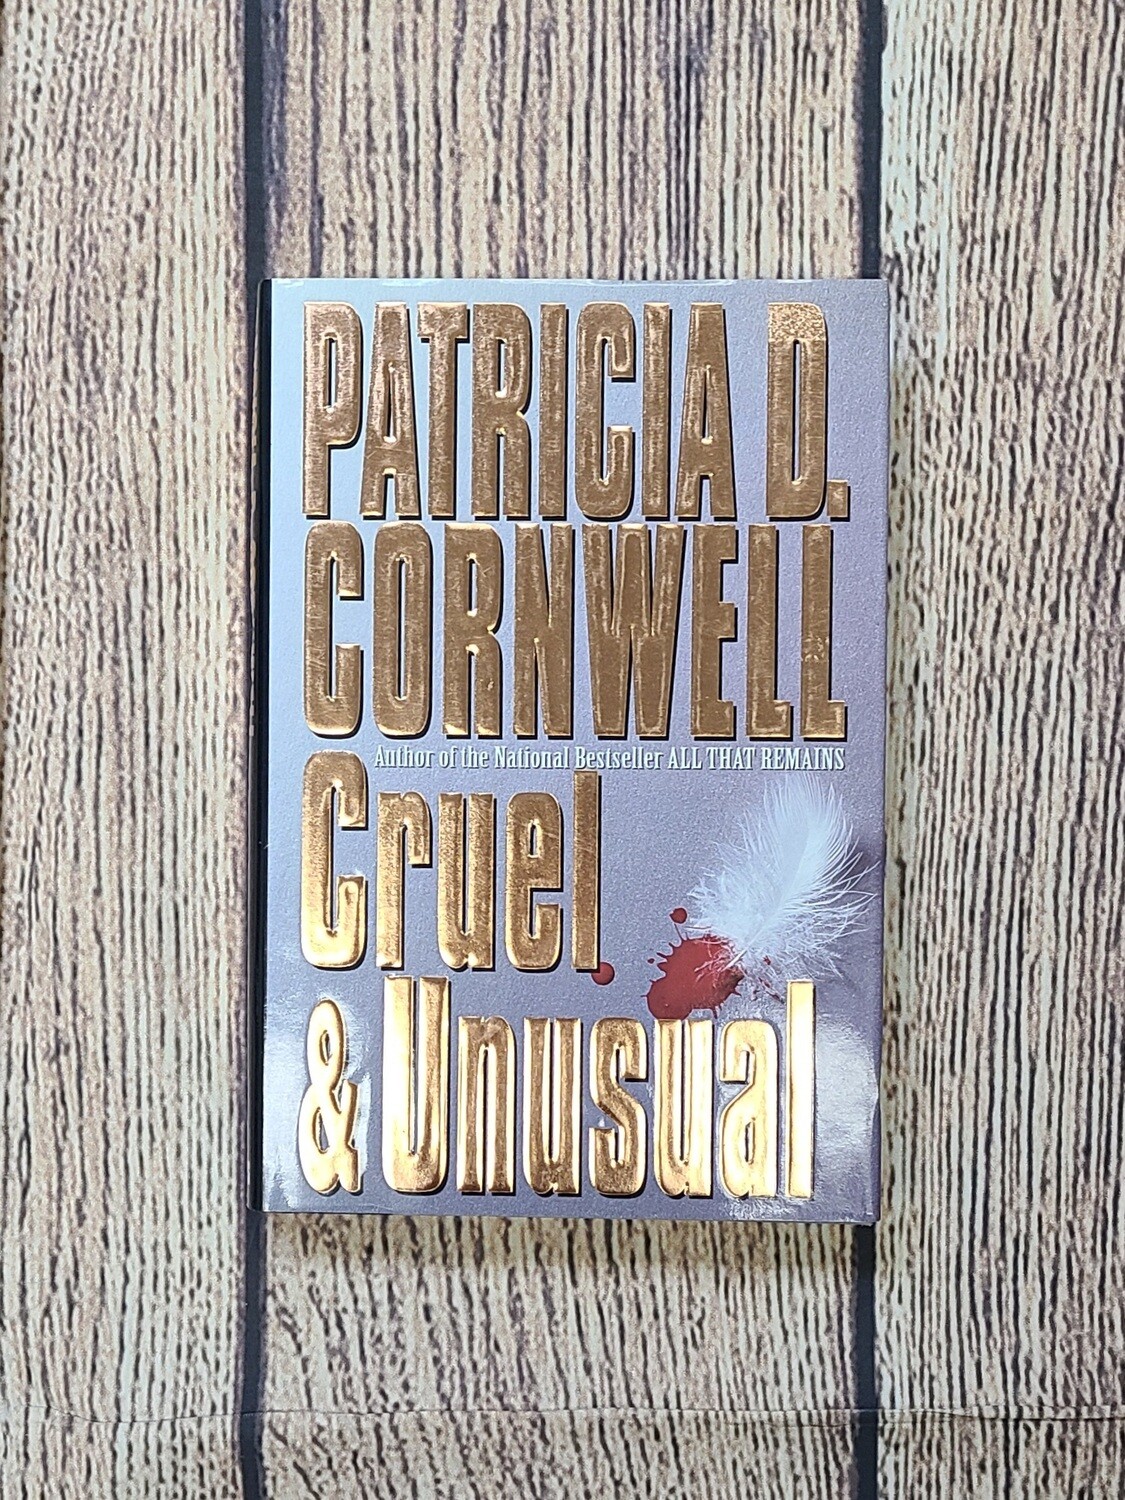 Cruel and Unusual by Patricia Cornwell - Hardback